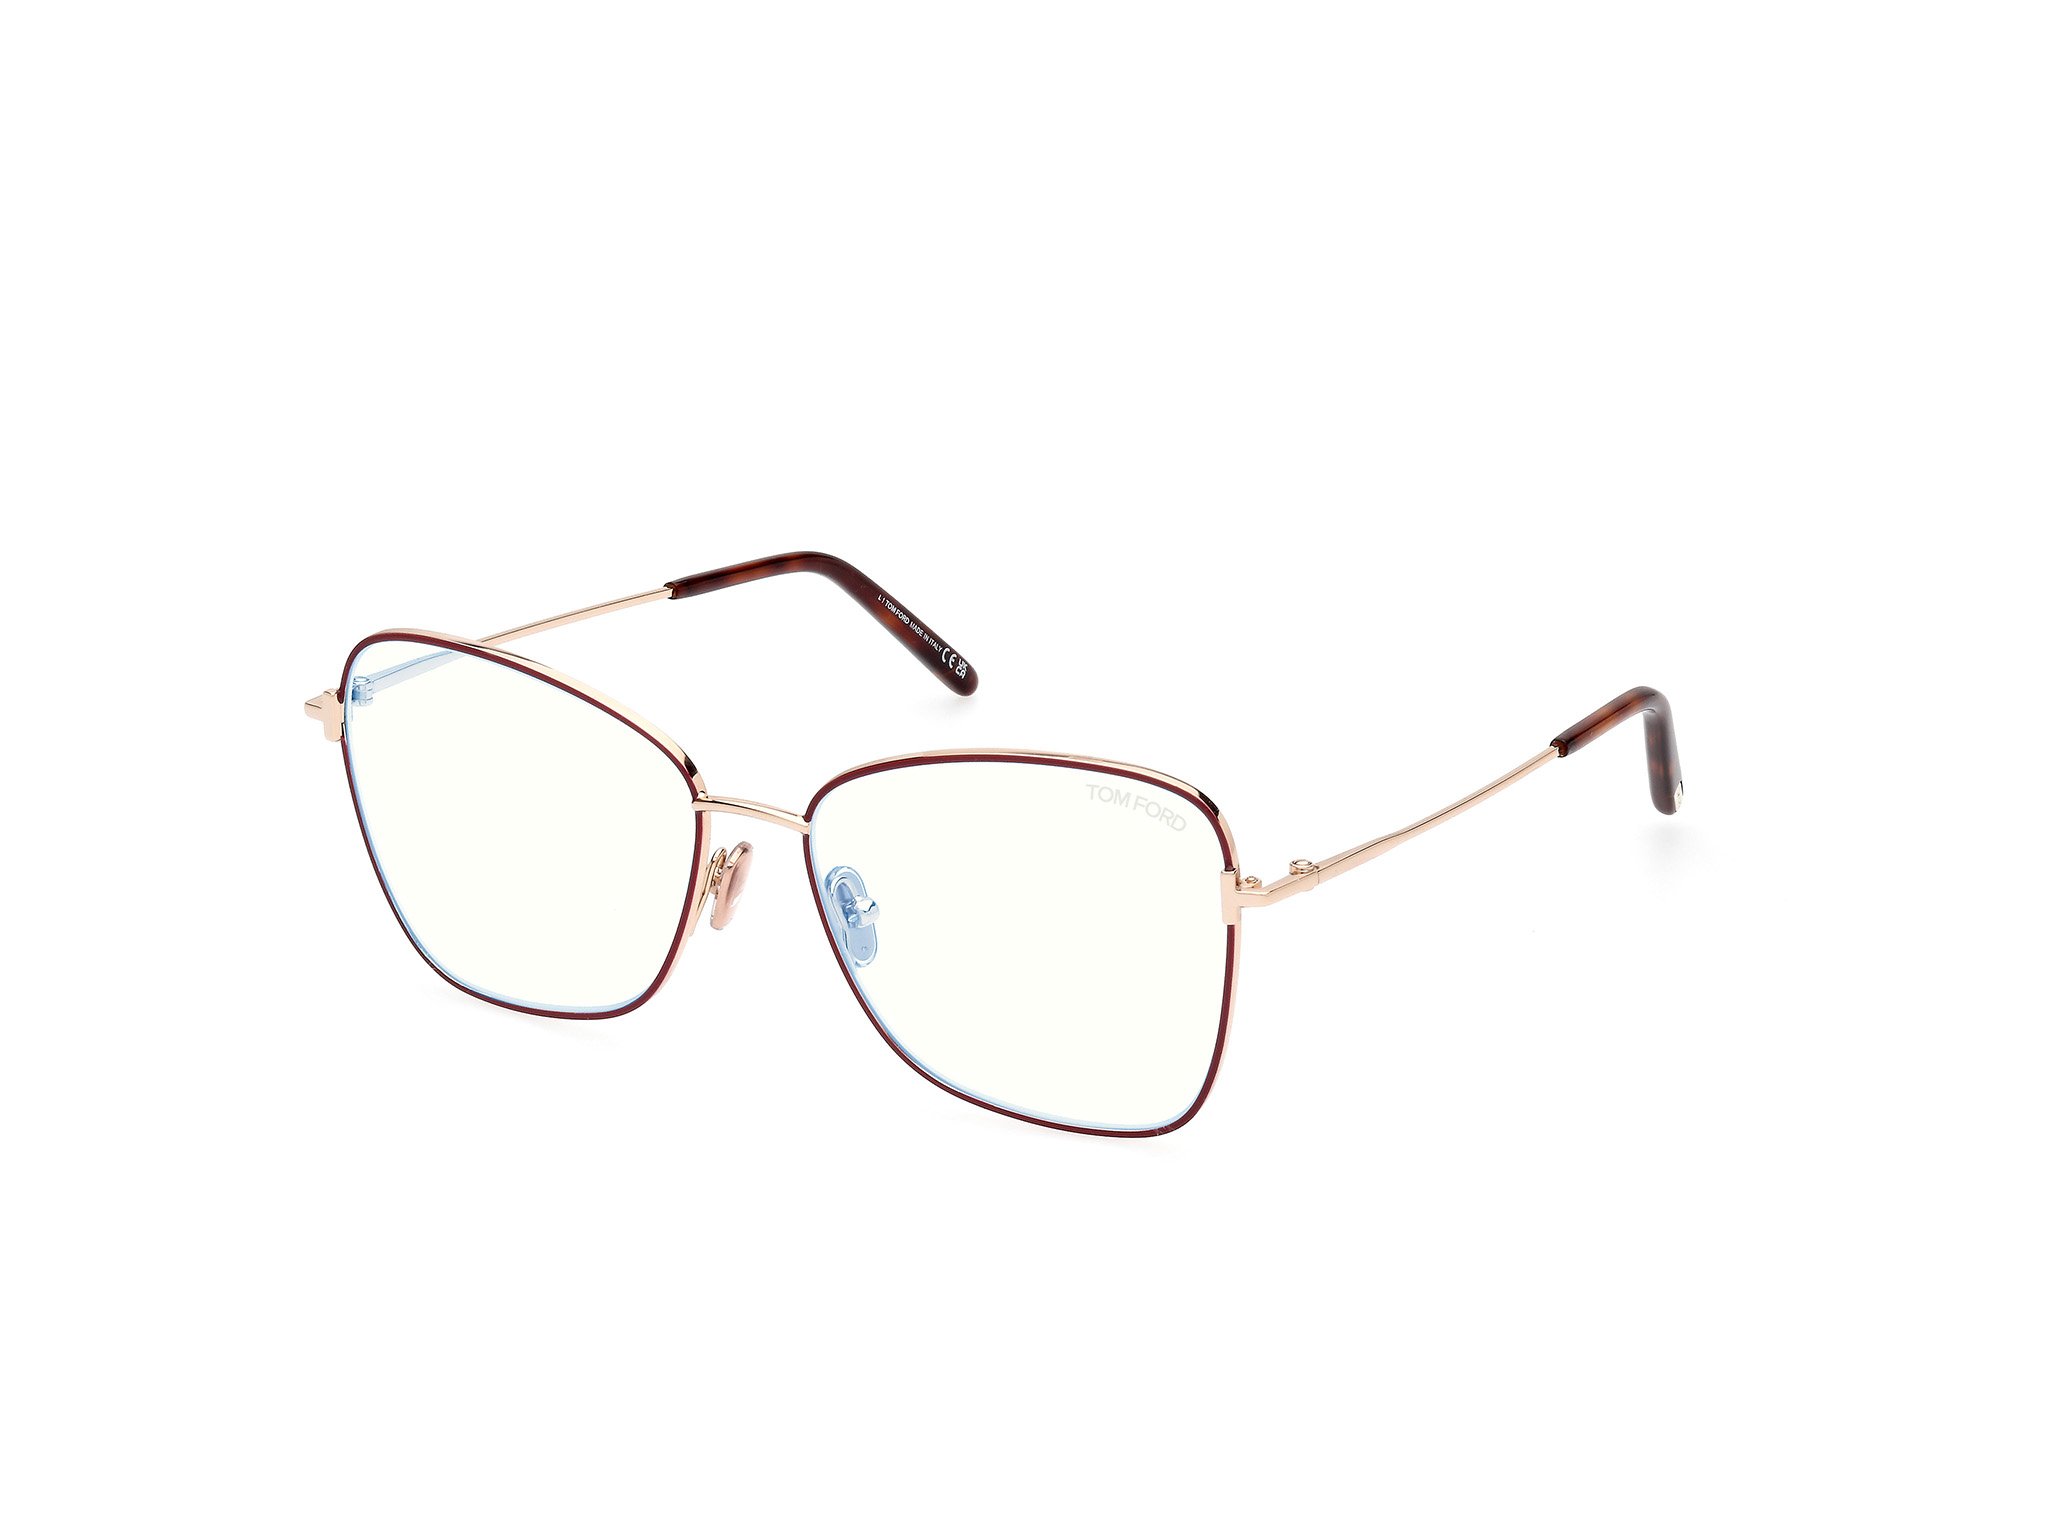 Tom Ford Brille für Damen in Bordeaux/Gold FT5906-B 069